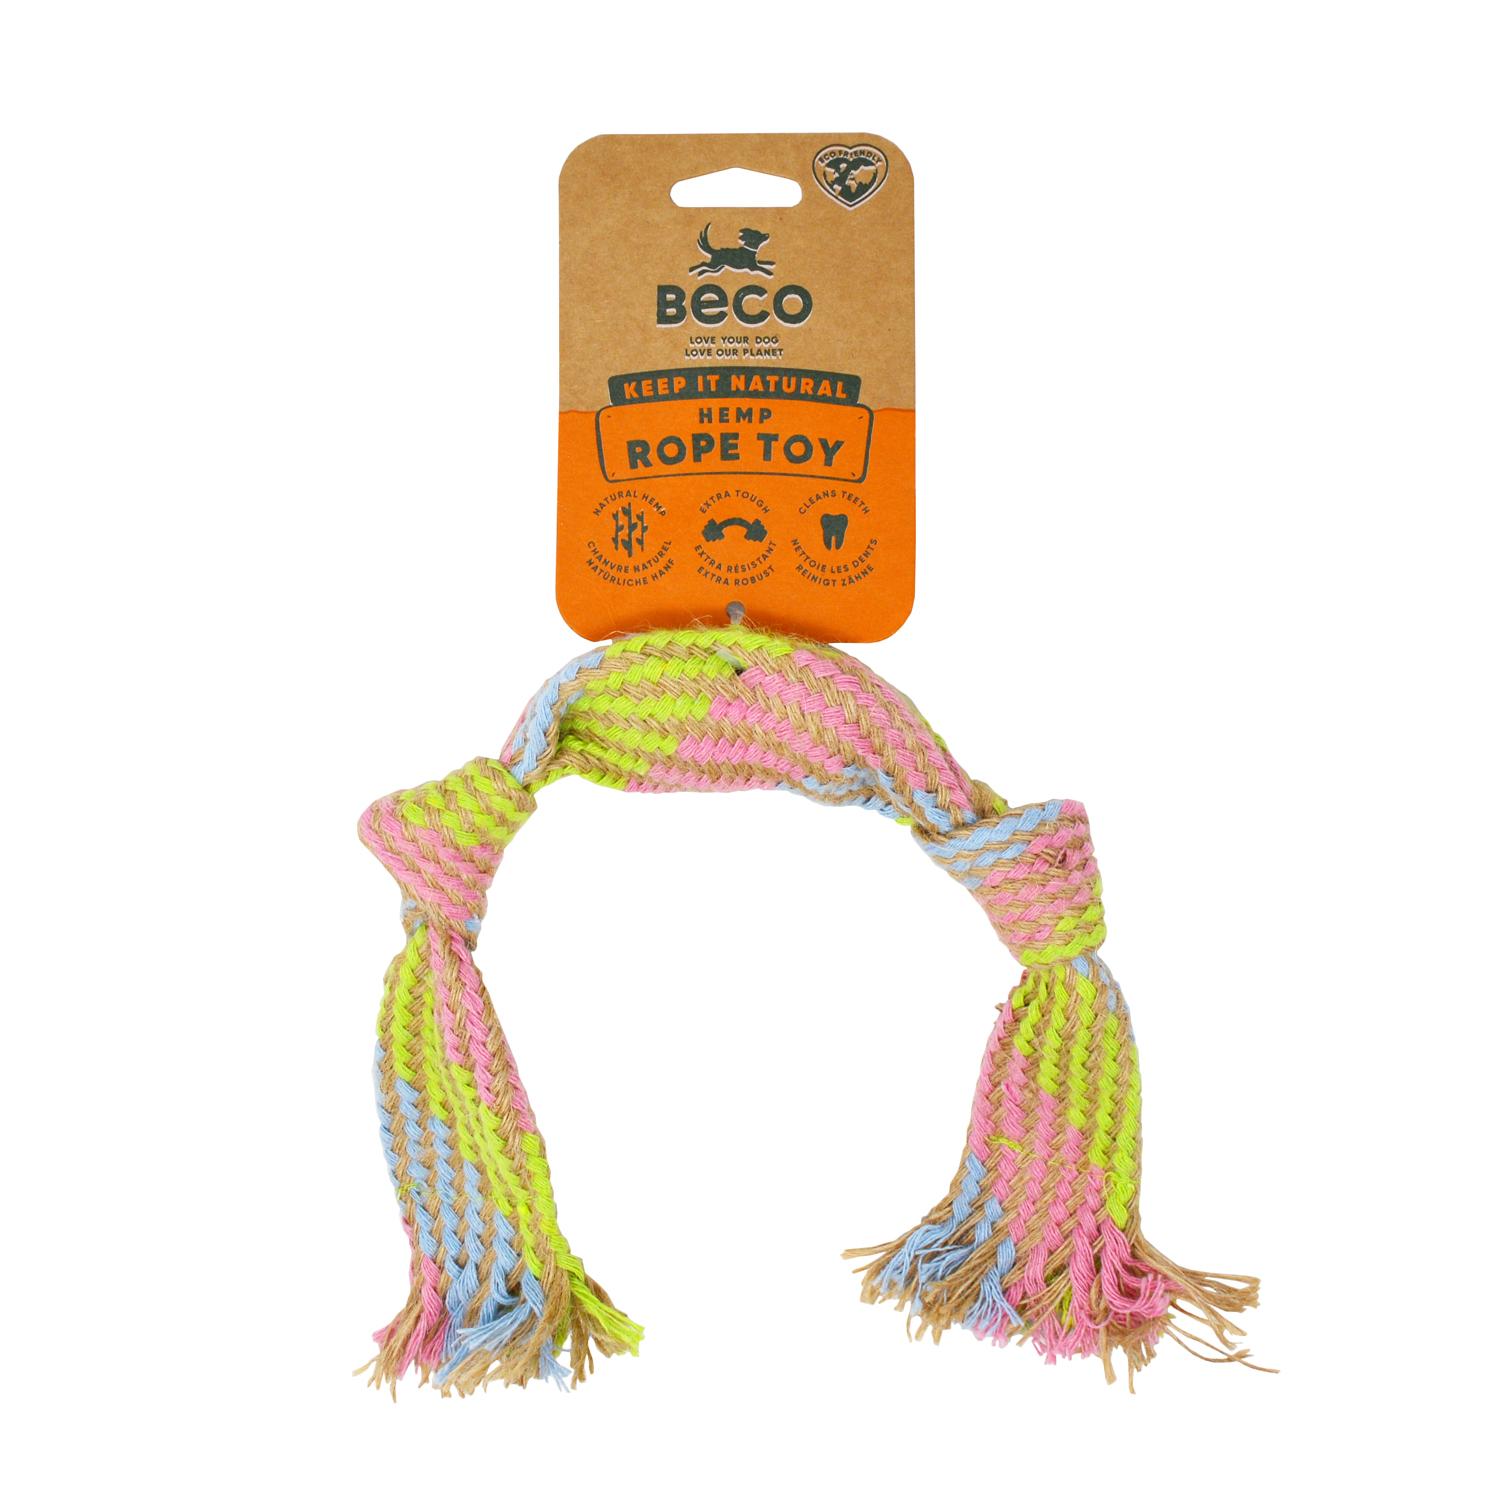 A Beco medium sized hemp rope squeaky dog toy